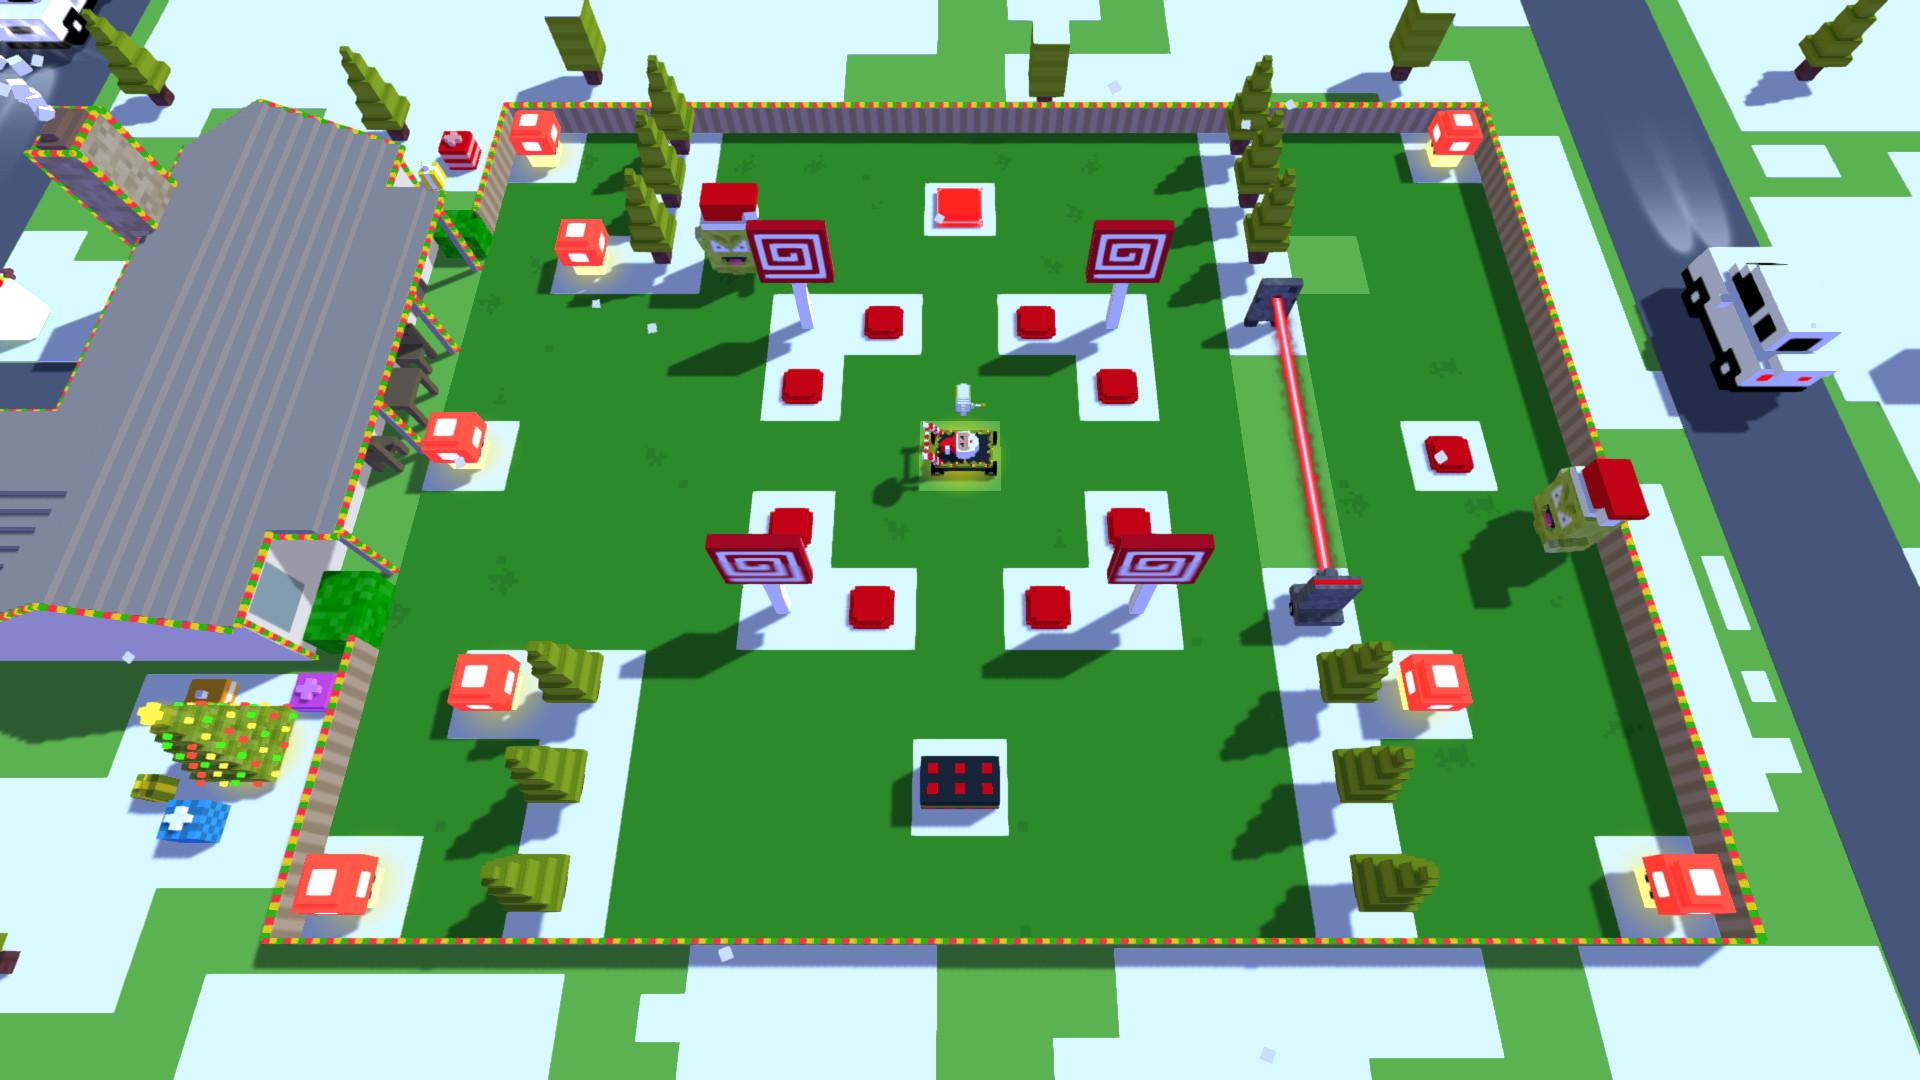 Screenshot №8 from game Grass Cutter - Mutated Lawns